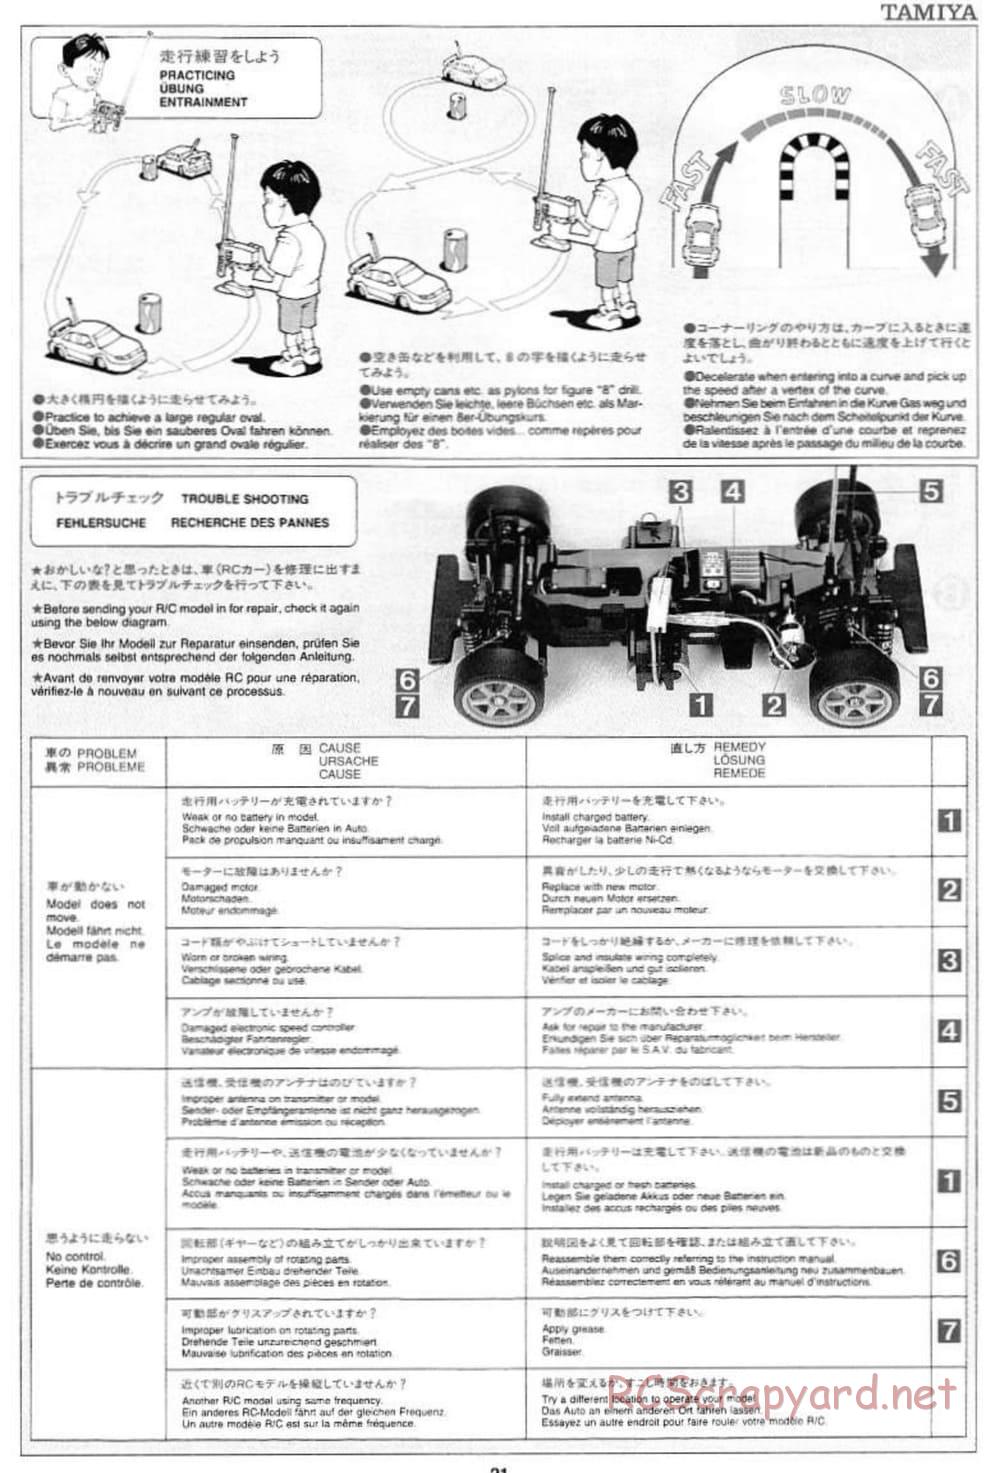 Tamiya - Castrol Mugen NSX - TL-01 Chassis - Manual - Page 21